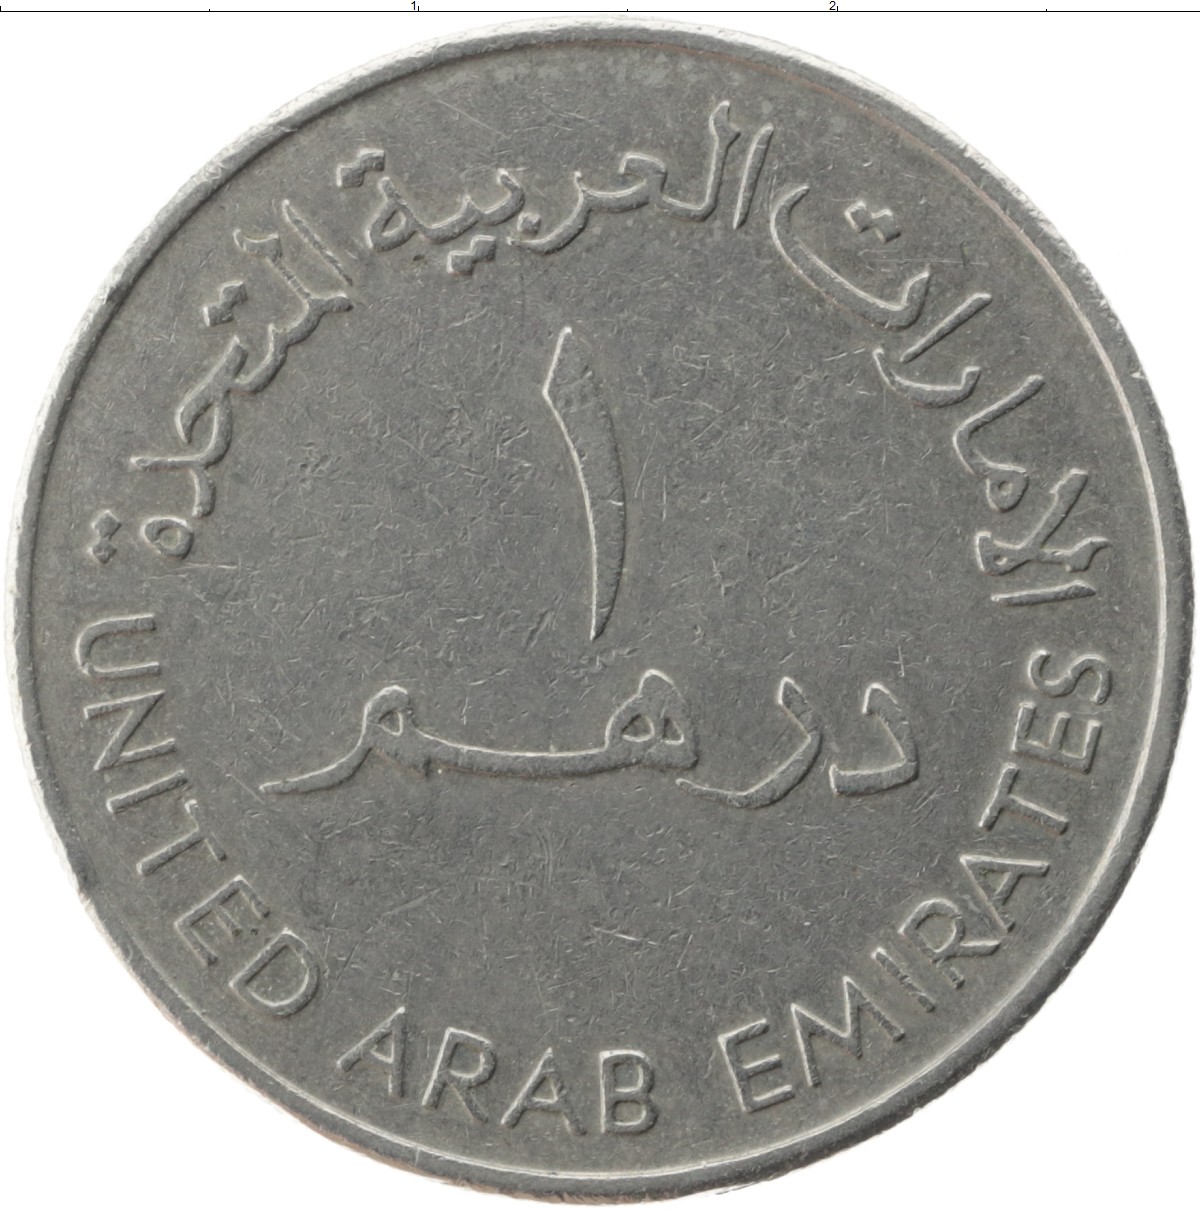 550 дирхам. United arab Emirates монета 1990. Дирхам ОАЭ монеты. Монета 1 дирхам (ОАЭ) арабские эмираты.. Монеты ОАЭ 1 дирхам.